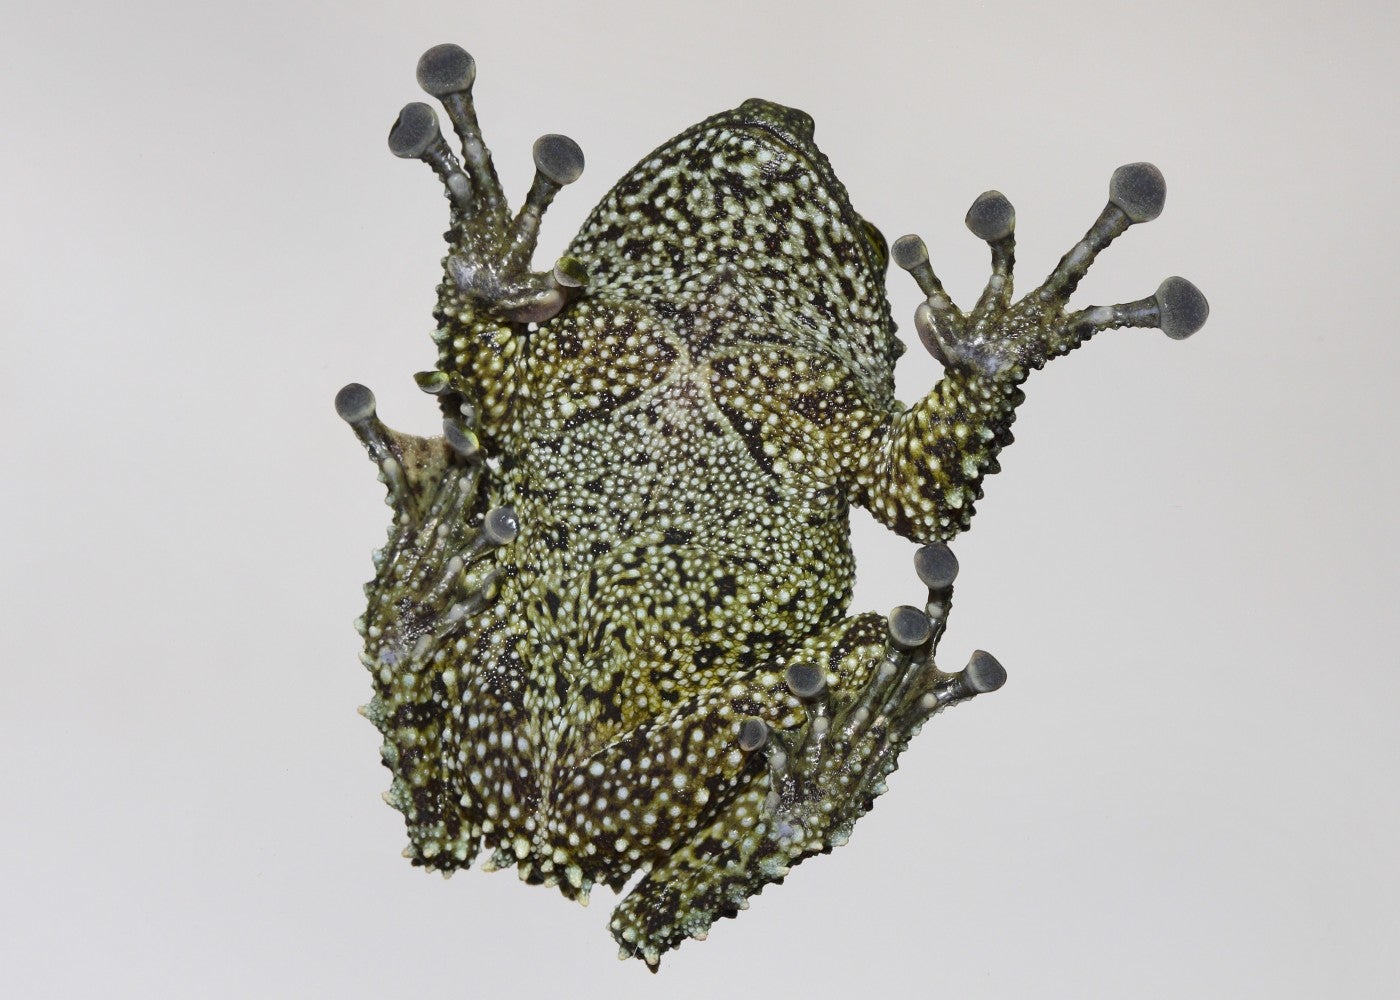 Underside of a Vietnamese mossy frog